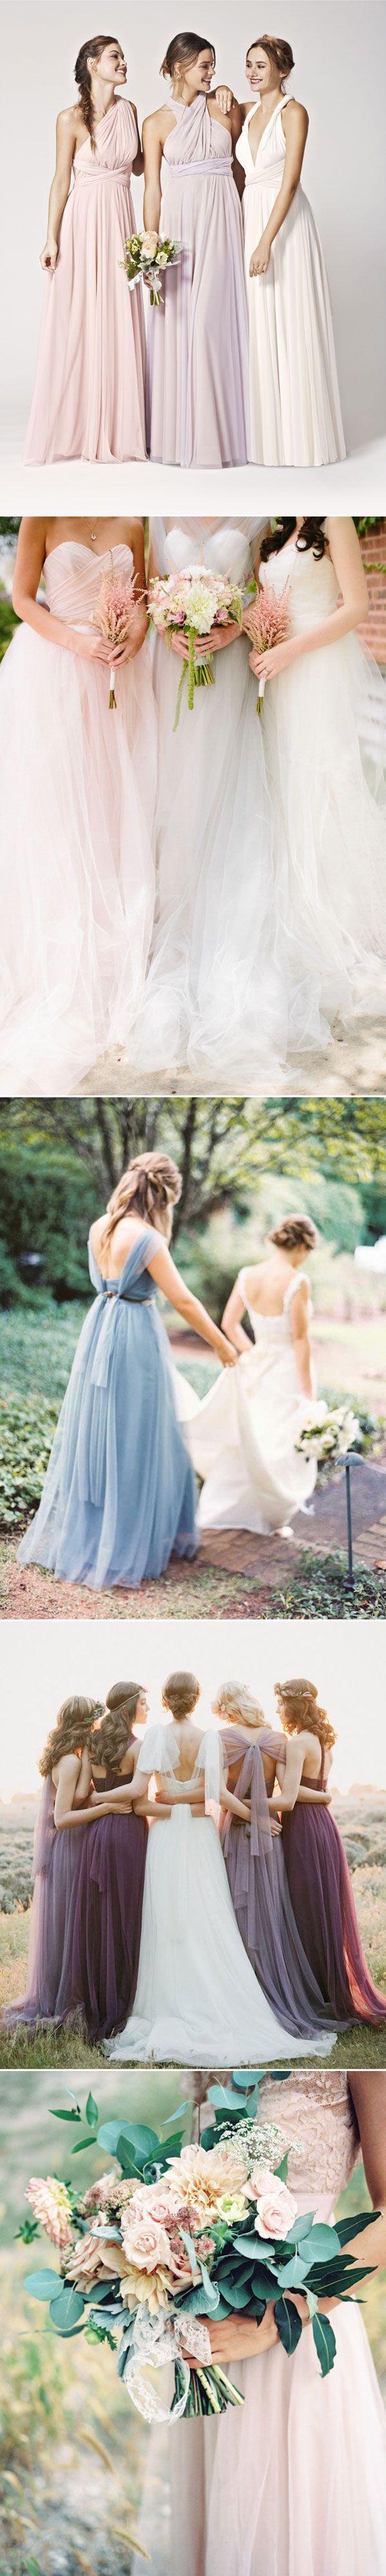 Wedding - Top 6 Bridesmaid Dress Trends For Fall Wedding 2015